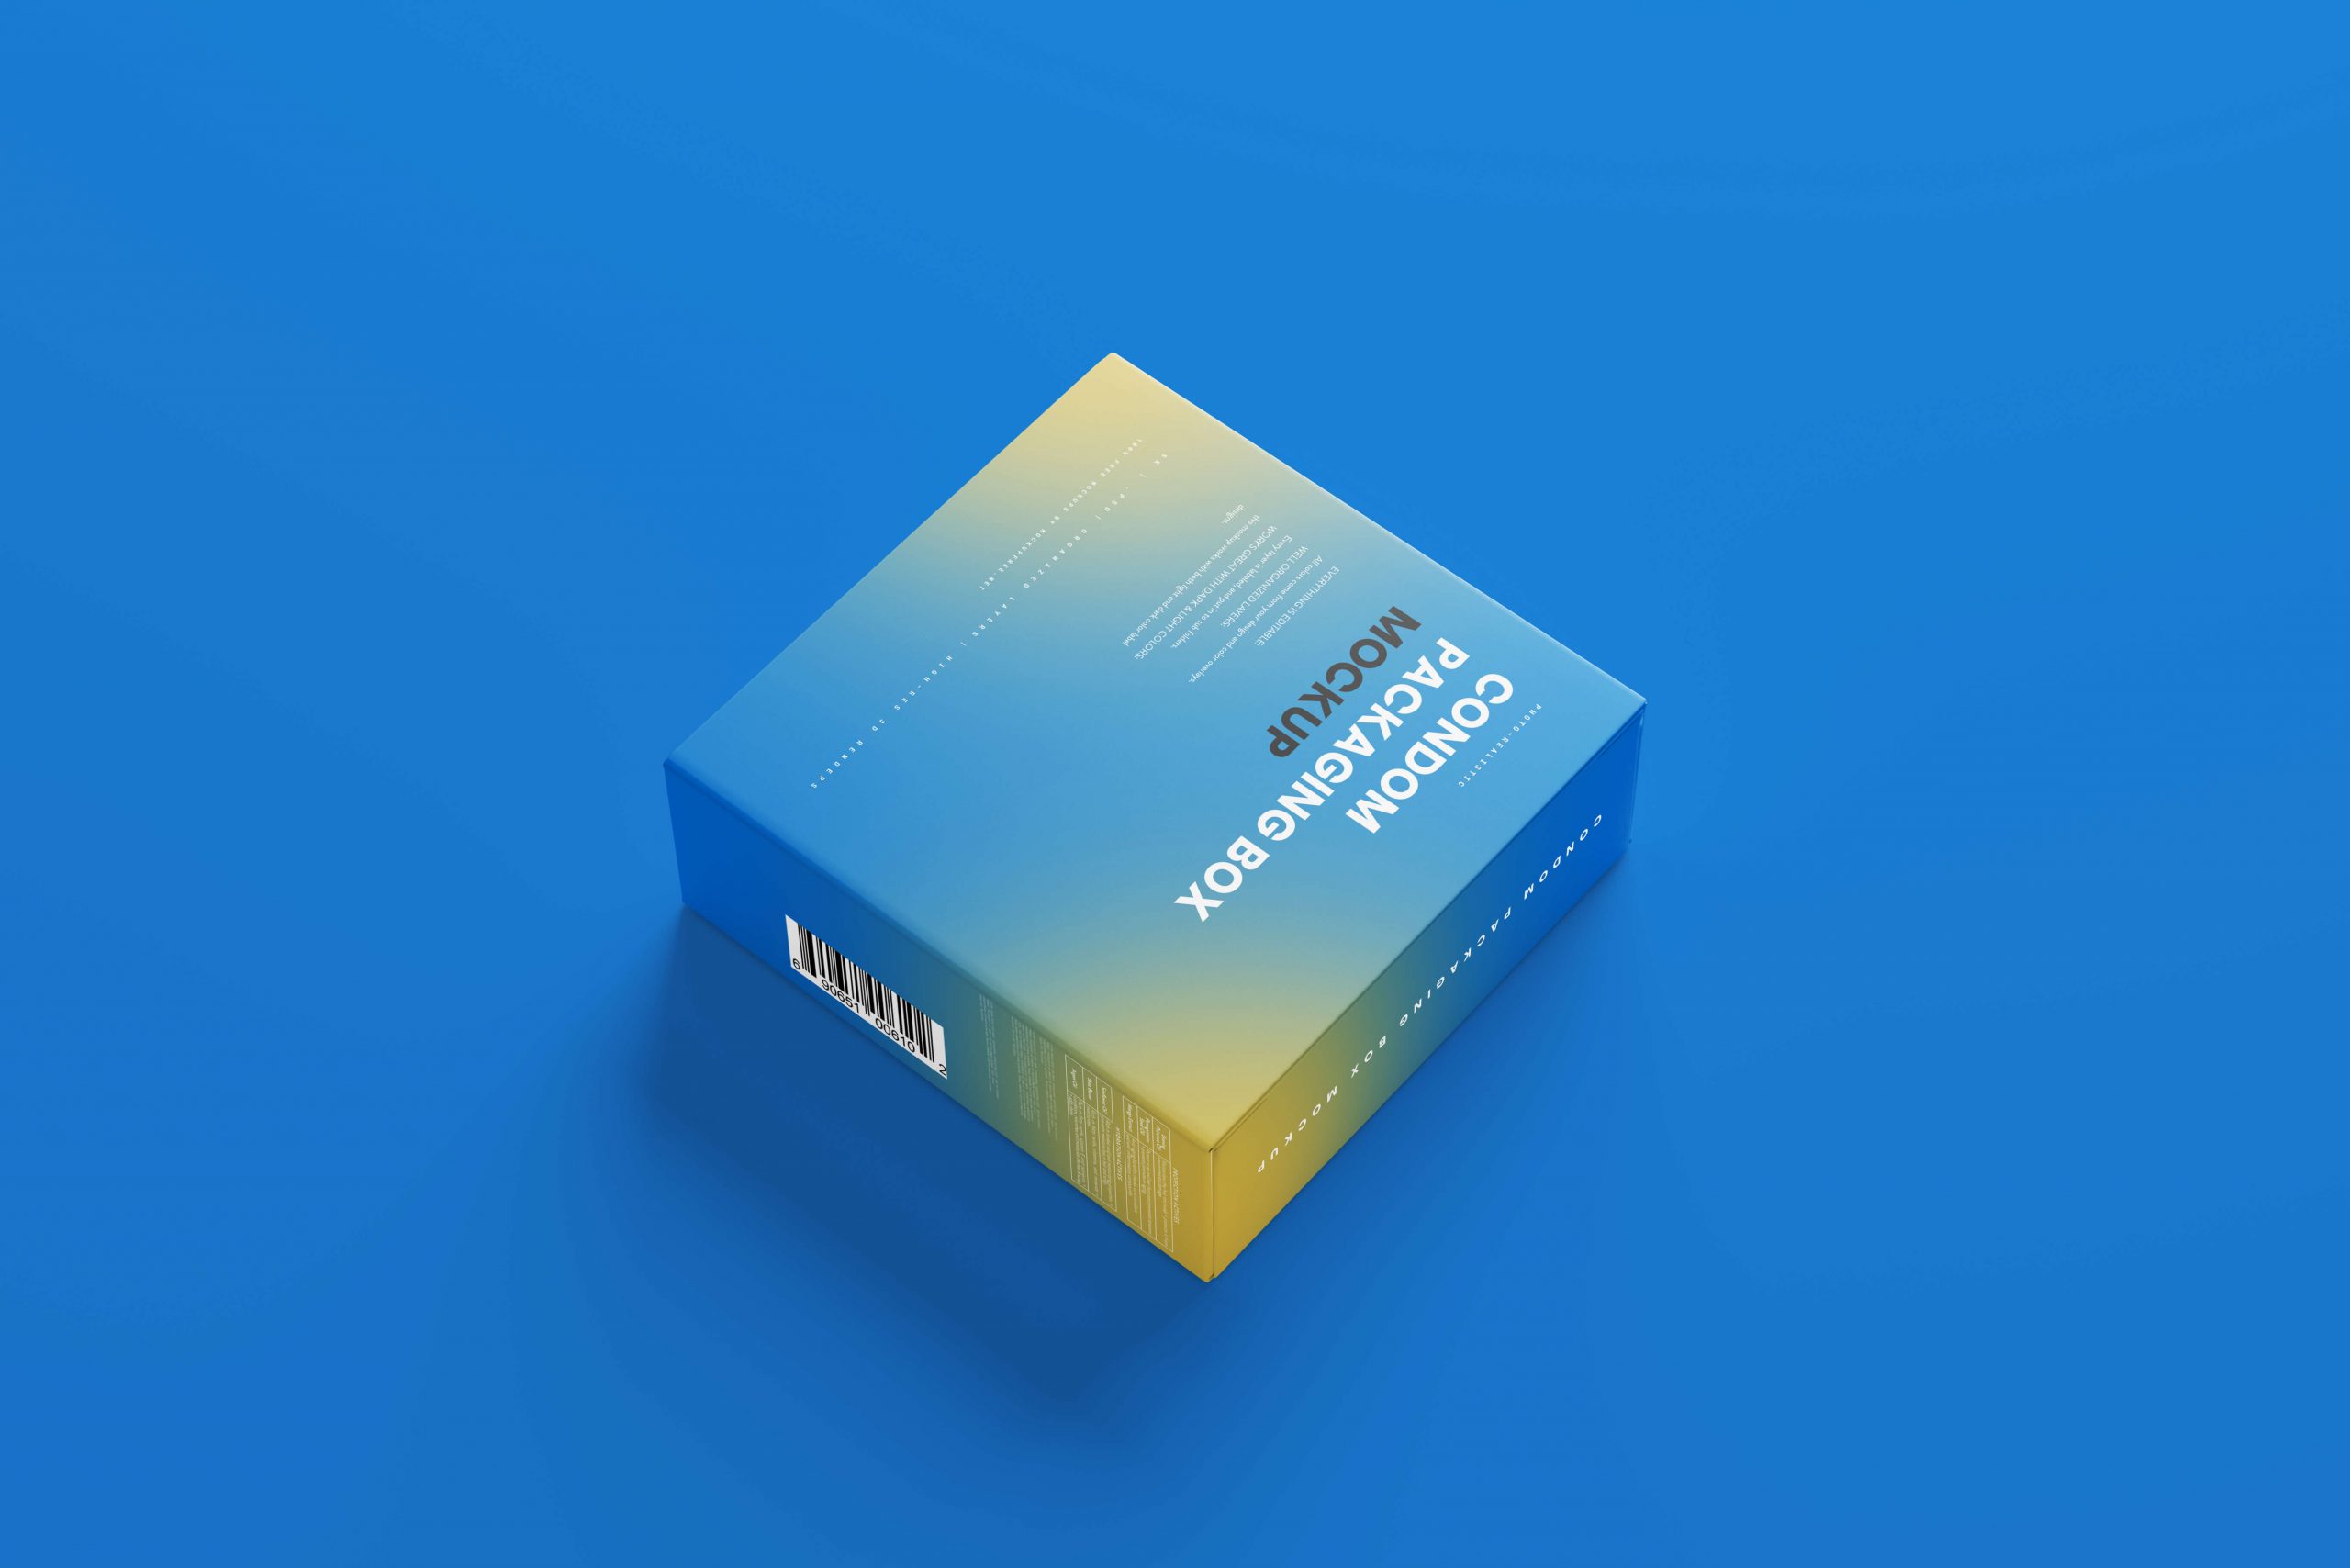 10 Free Condom Sachet Packaging Box Mockup PSD Files6